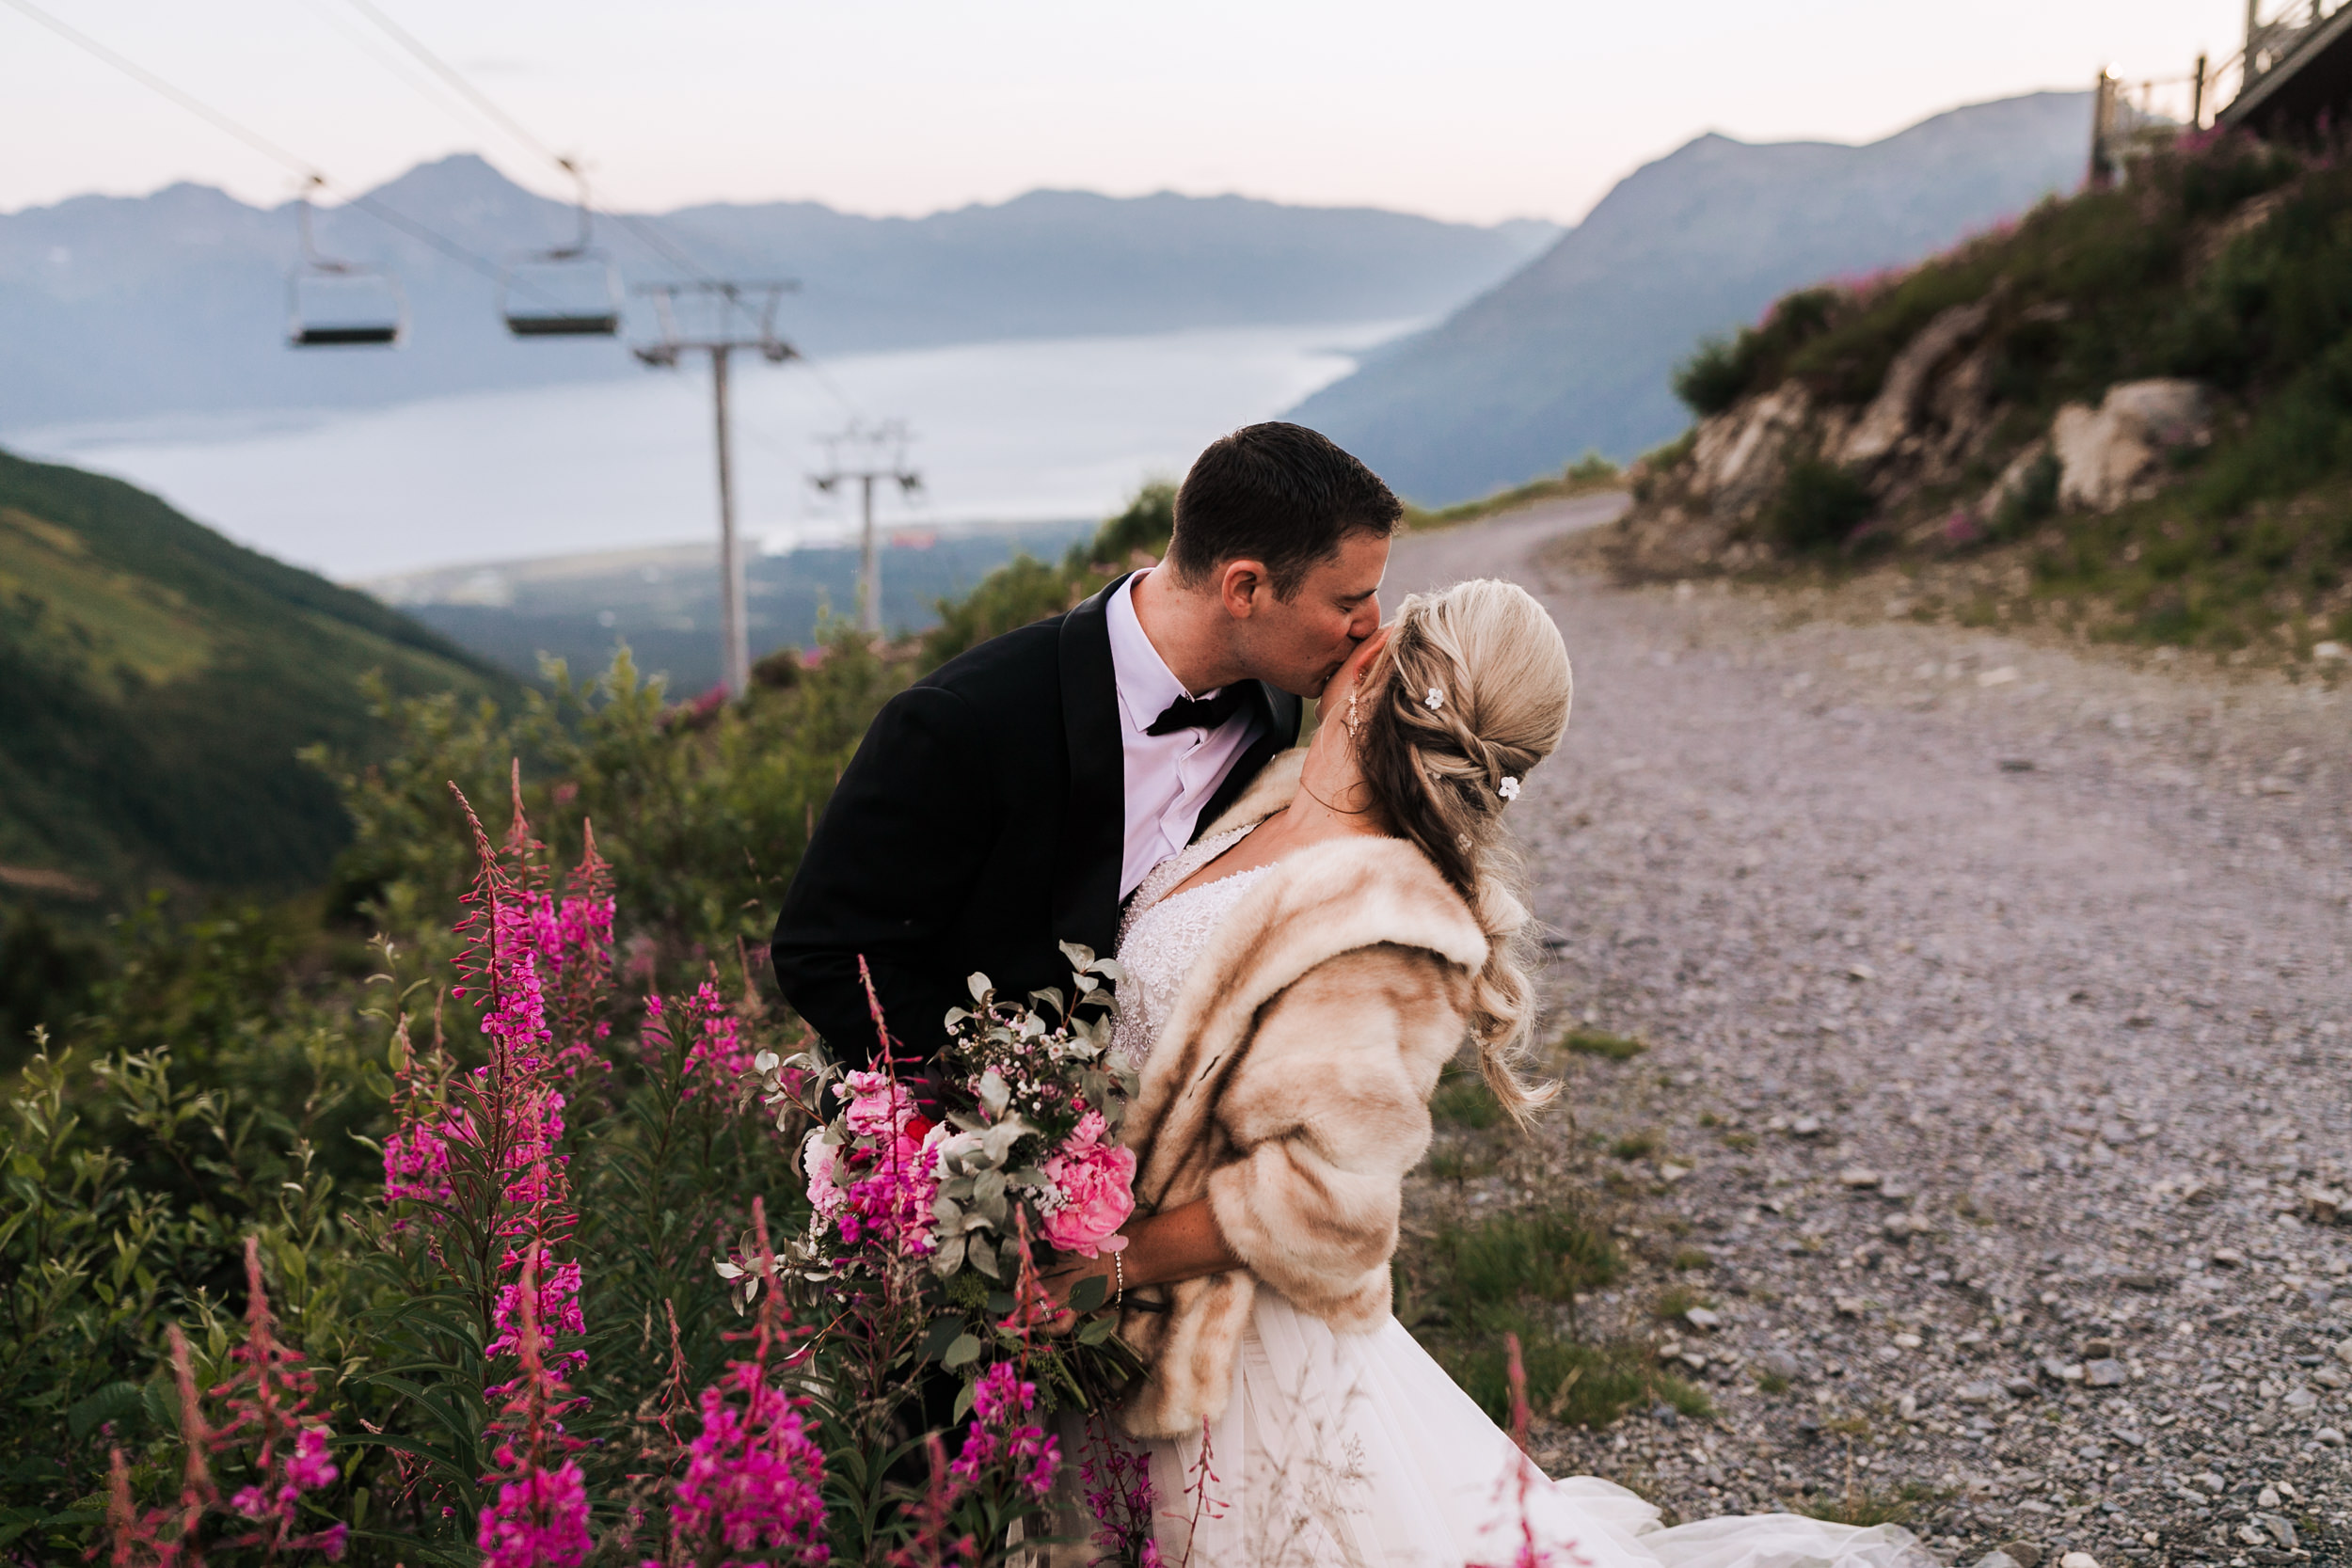 alaska destination wedding at alyeska resort in girdwood | mountain chic wedding style | the hearnes adventure elopement photography